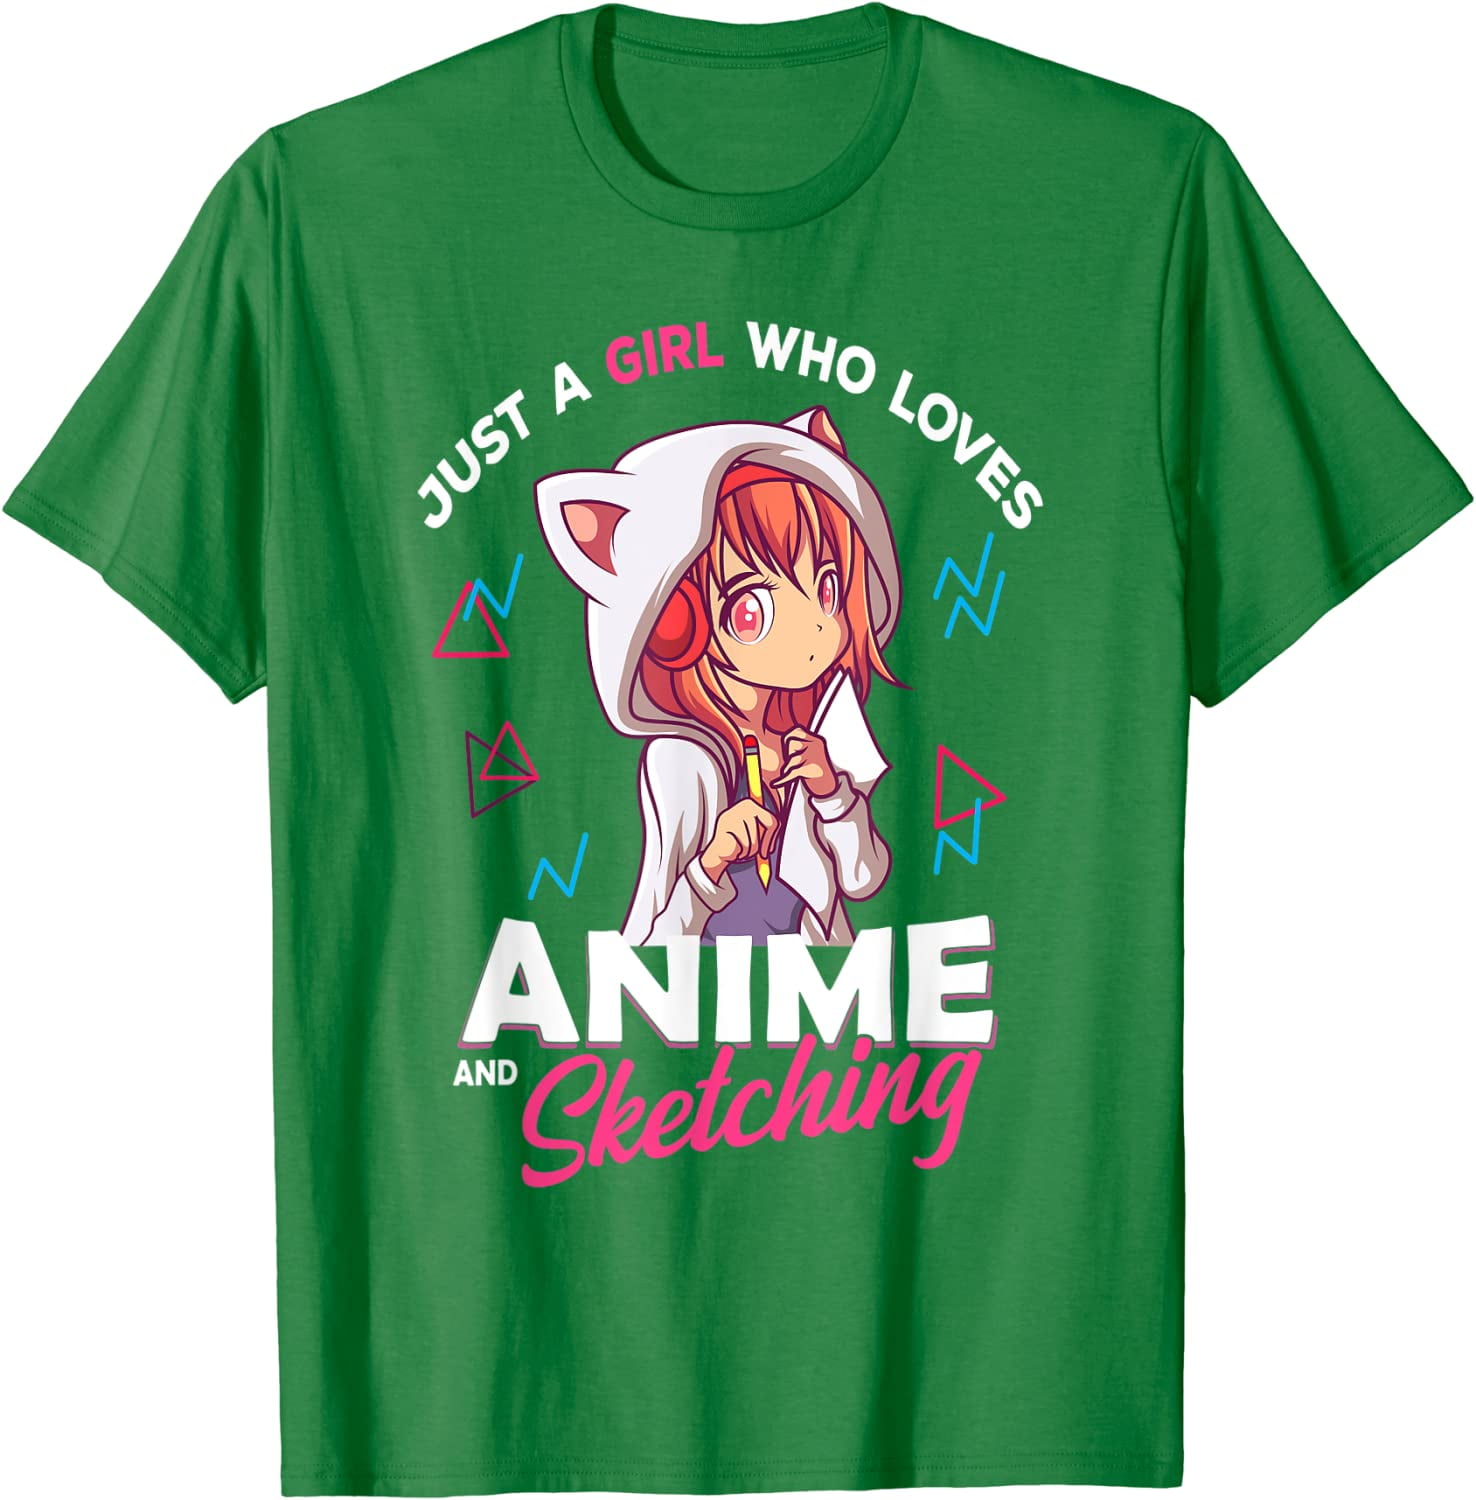 Kawaii Anime Girl T Shirt - Oversized Unisex Top Attitude Design | eBay